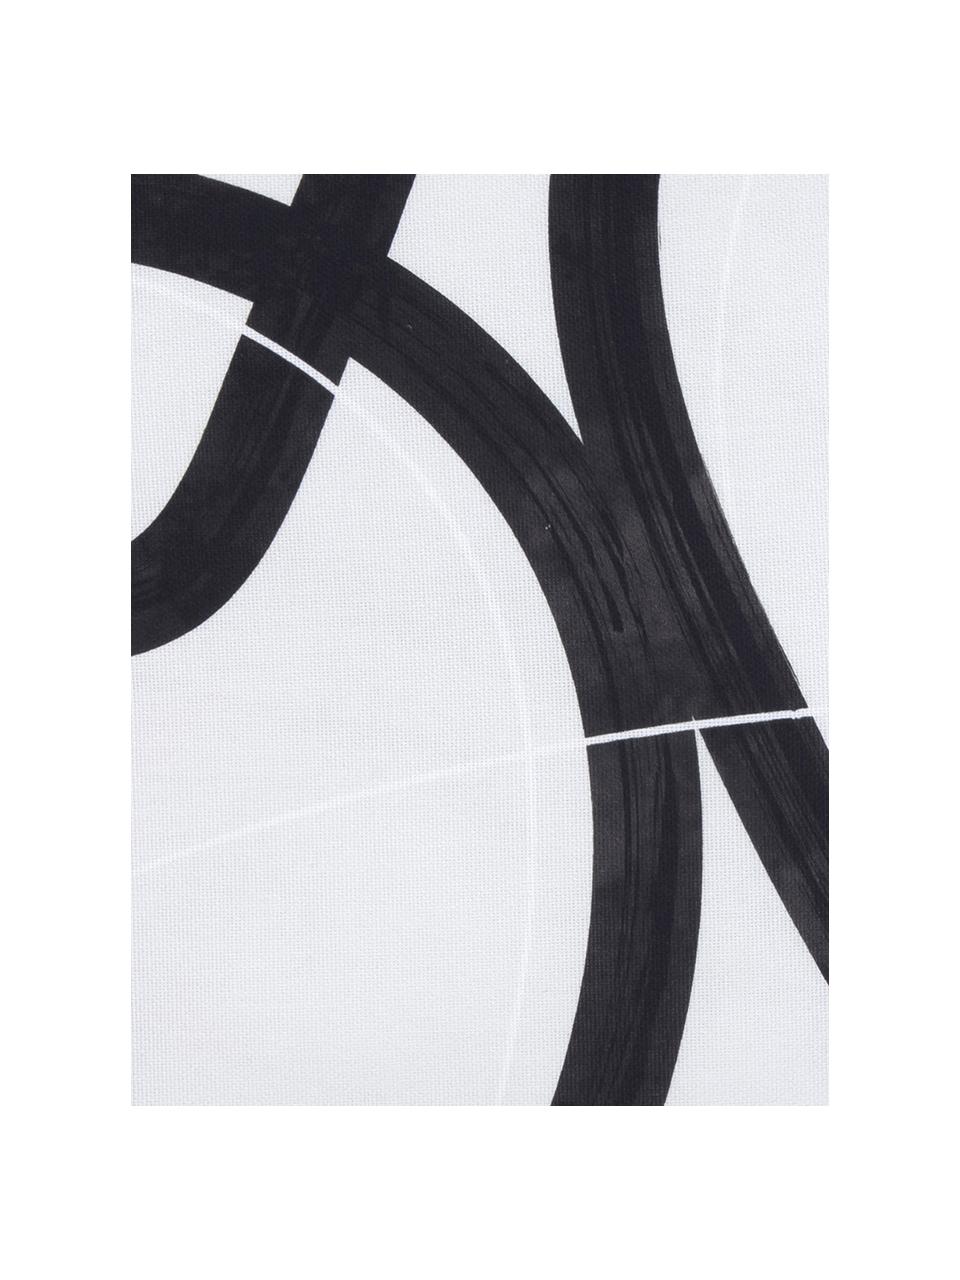 Federa arredo con stampa Elijah, 100% cotone, Beige, nero, bianco, Larg. 40 x Lung. 40 cm